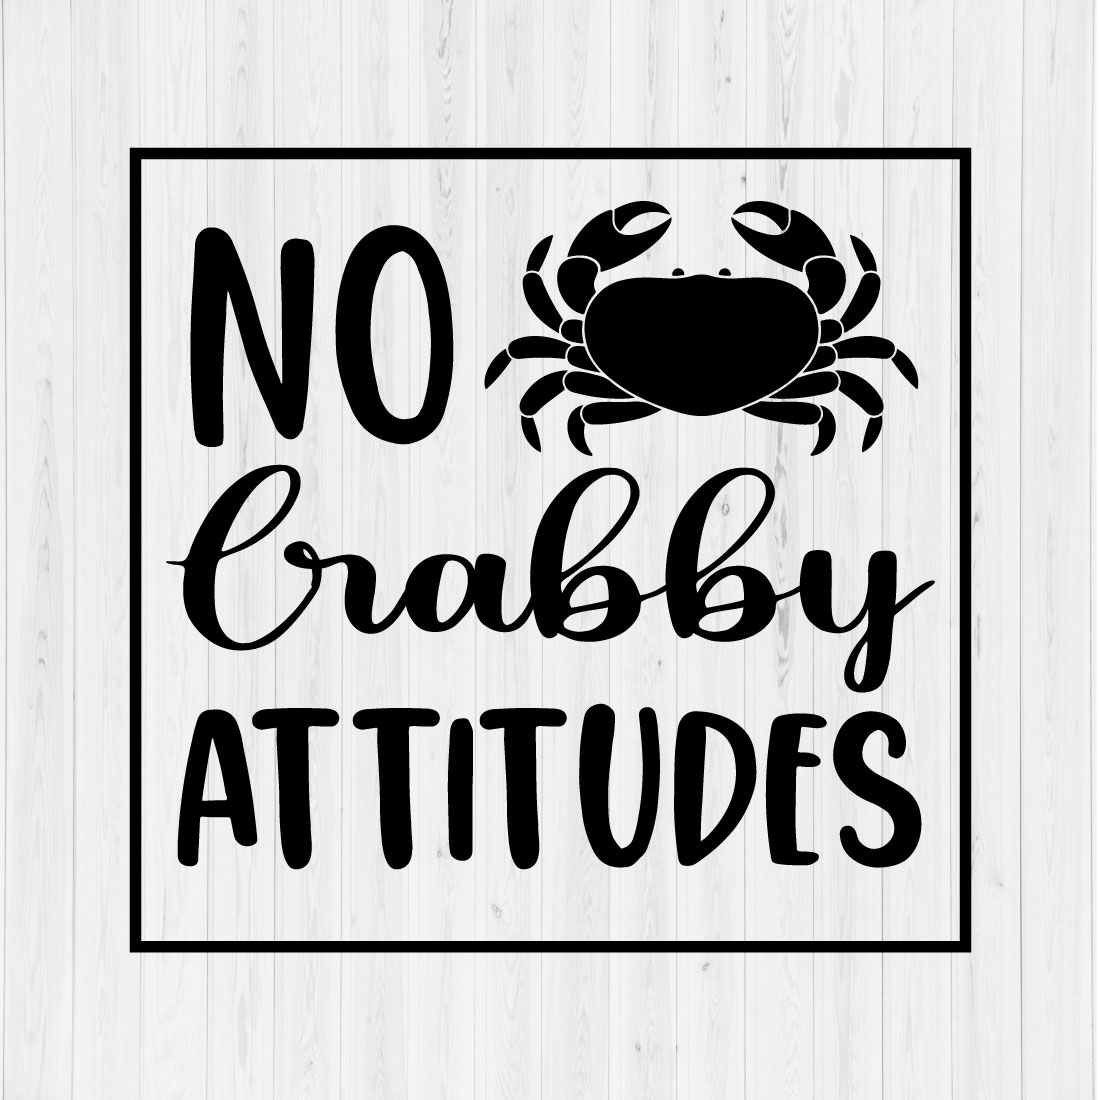 No Crabby Attitudes preview image.